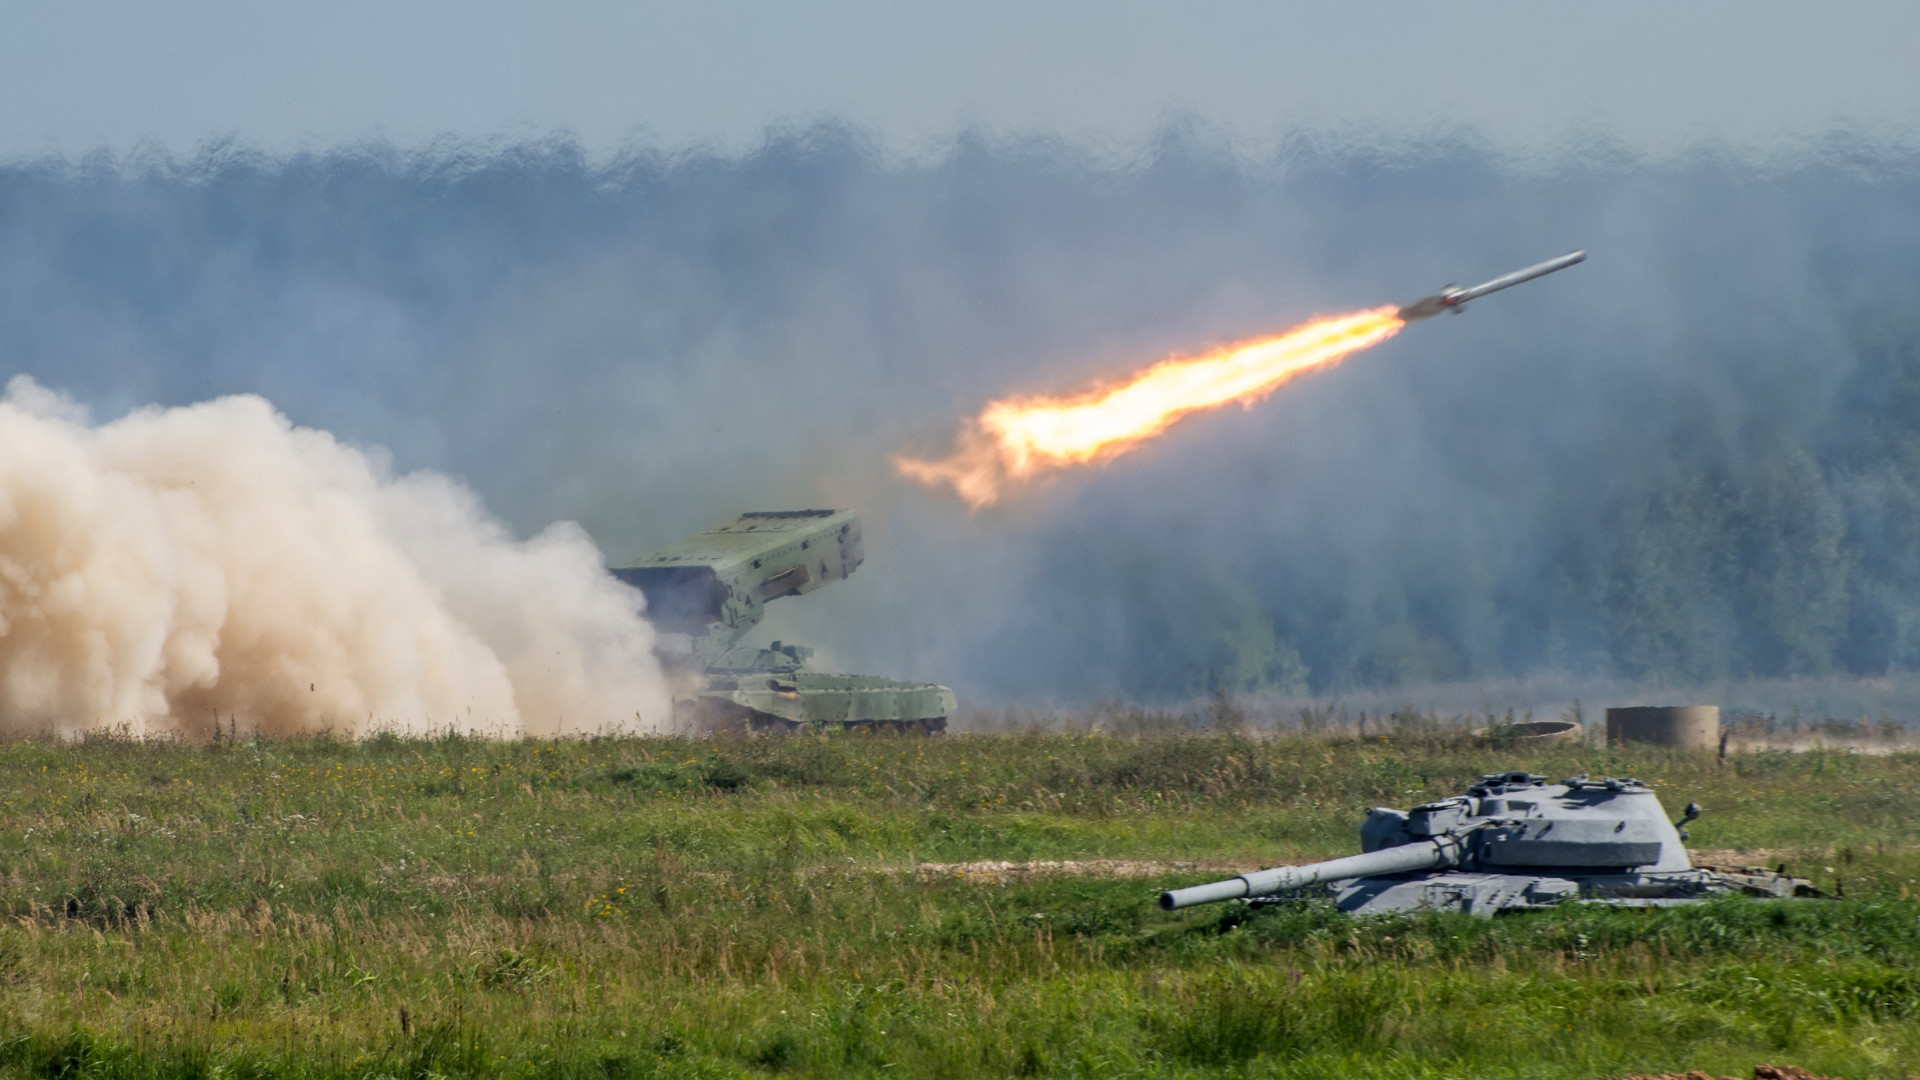 orosz ukran haboru orosz hadero tuzerseg tosz 1 tos 1 raketatuzerseg gyakorlat stock 570496